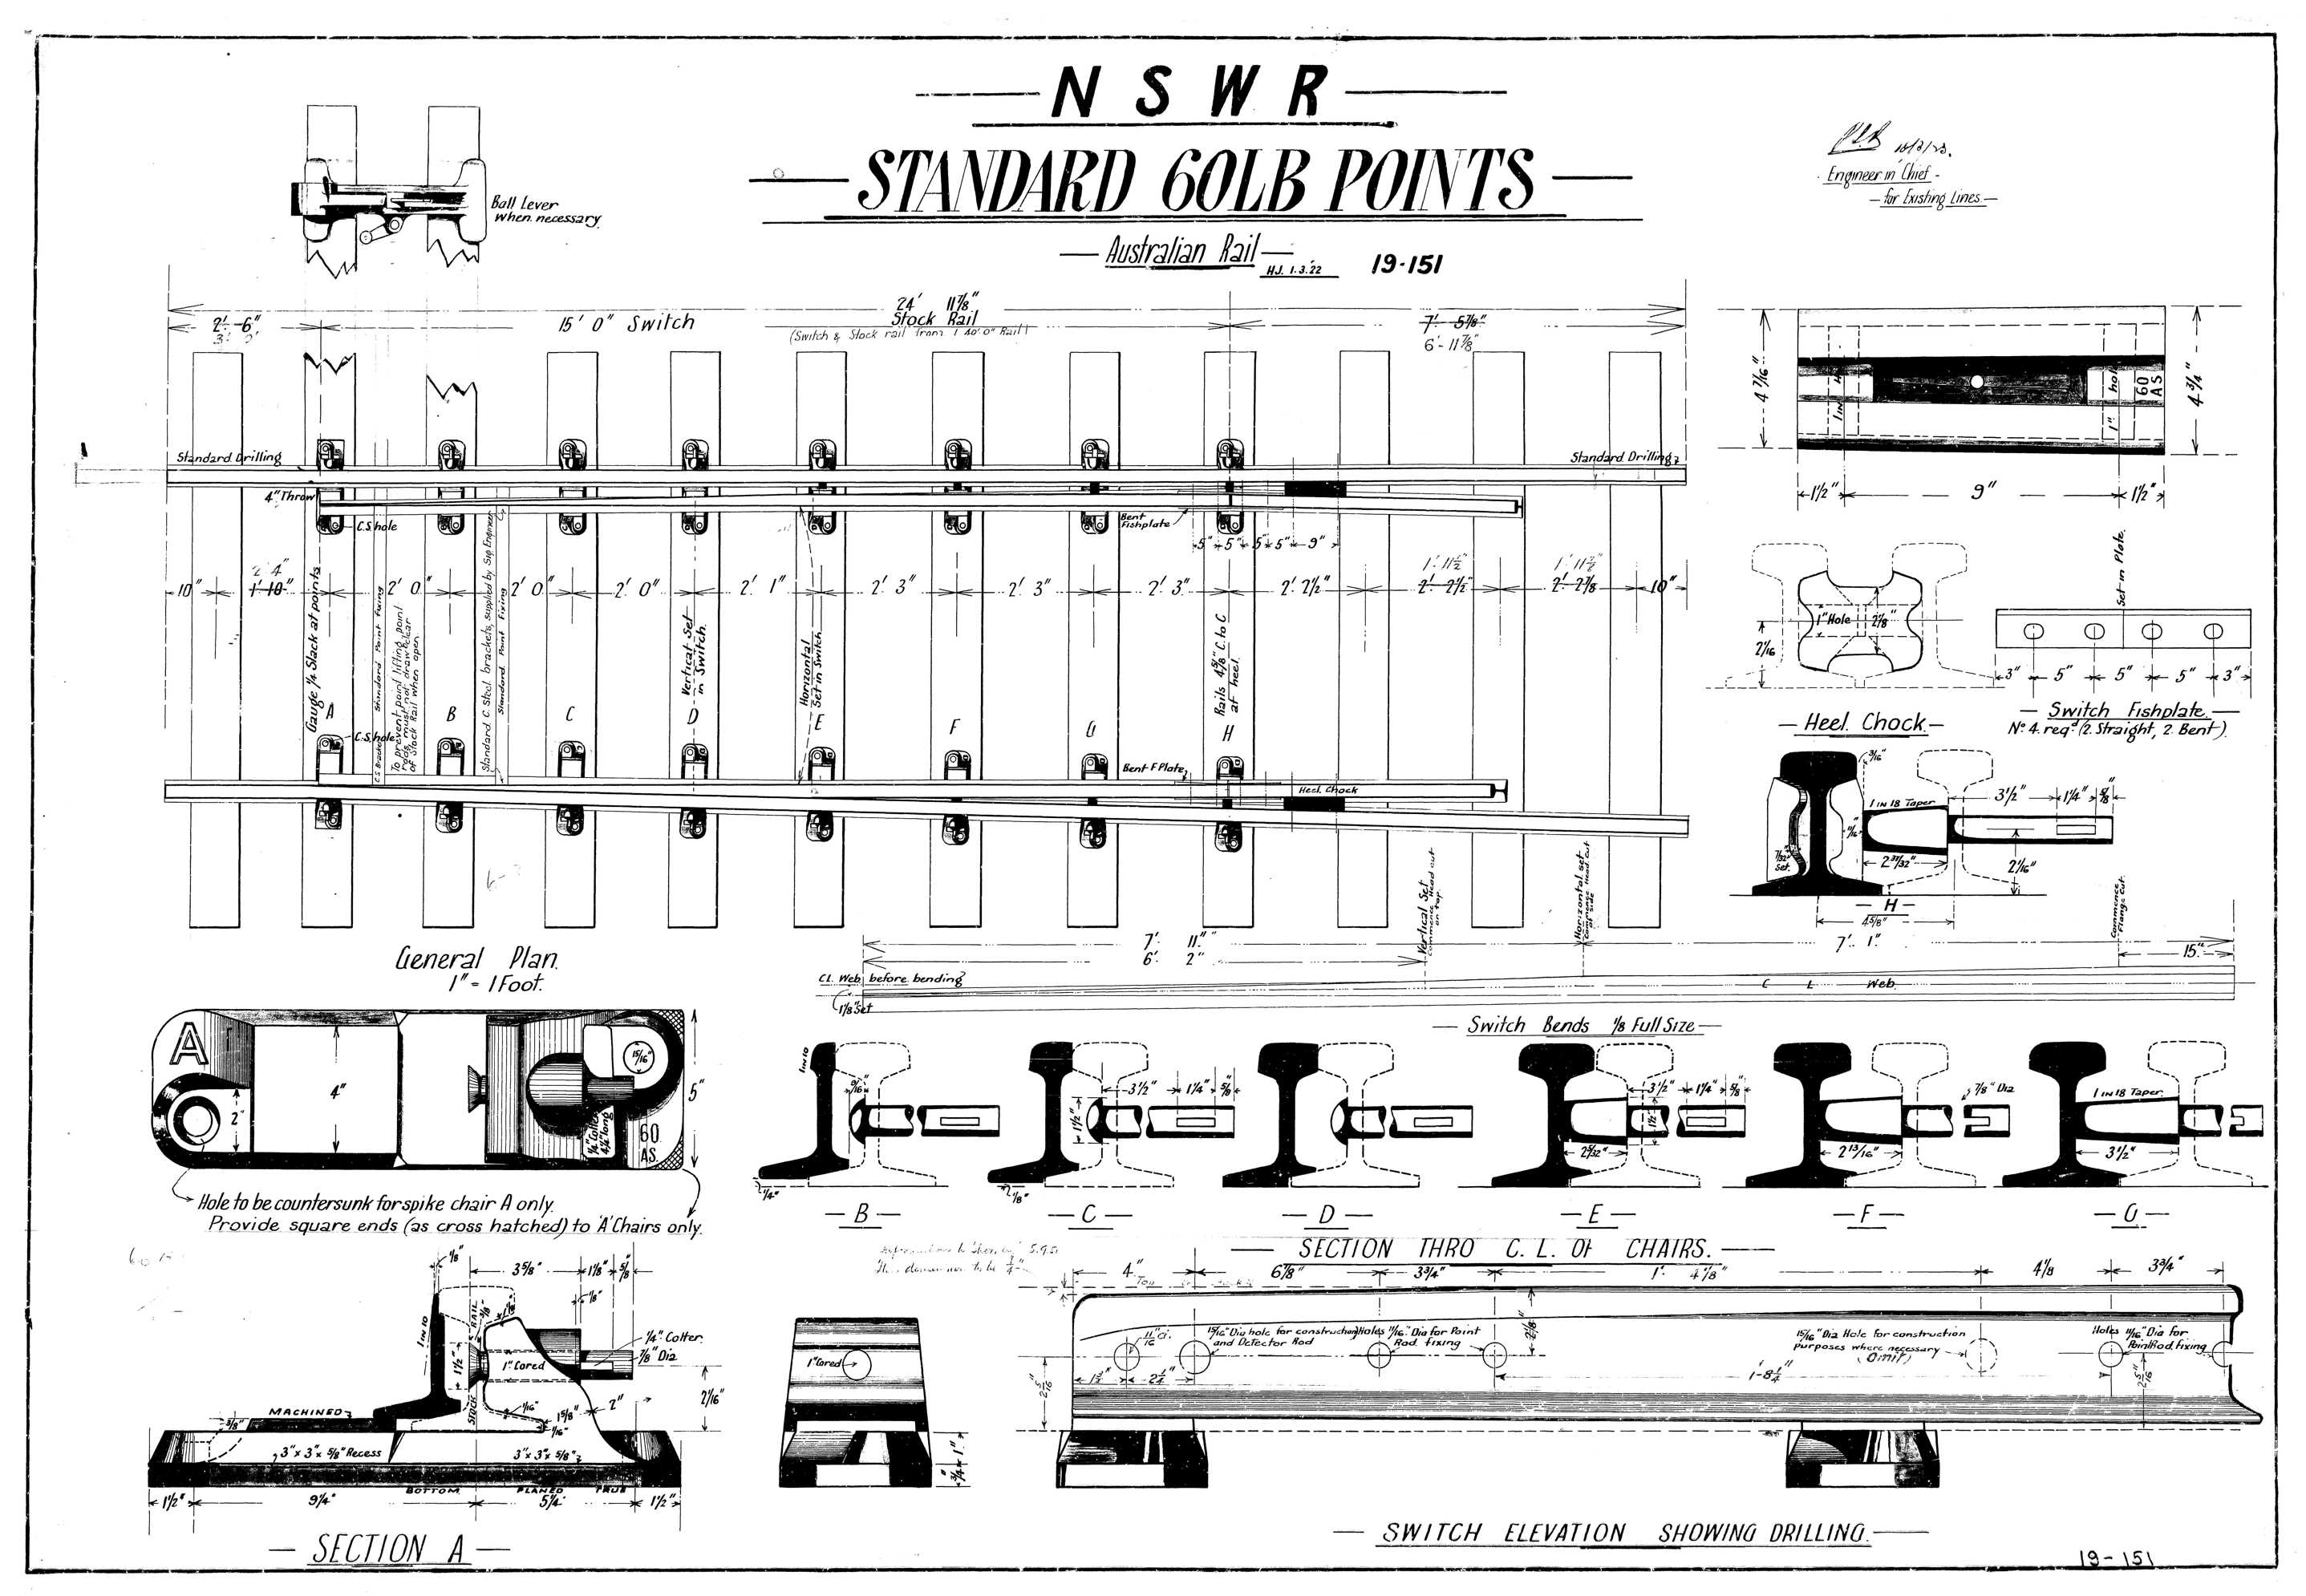 Standard 60 lb Points Australian Rail 1923.jpg